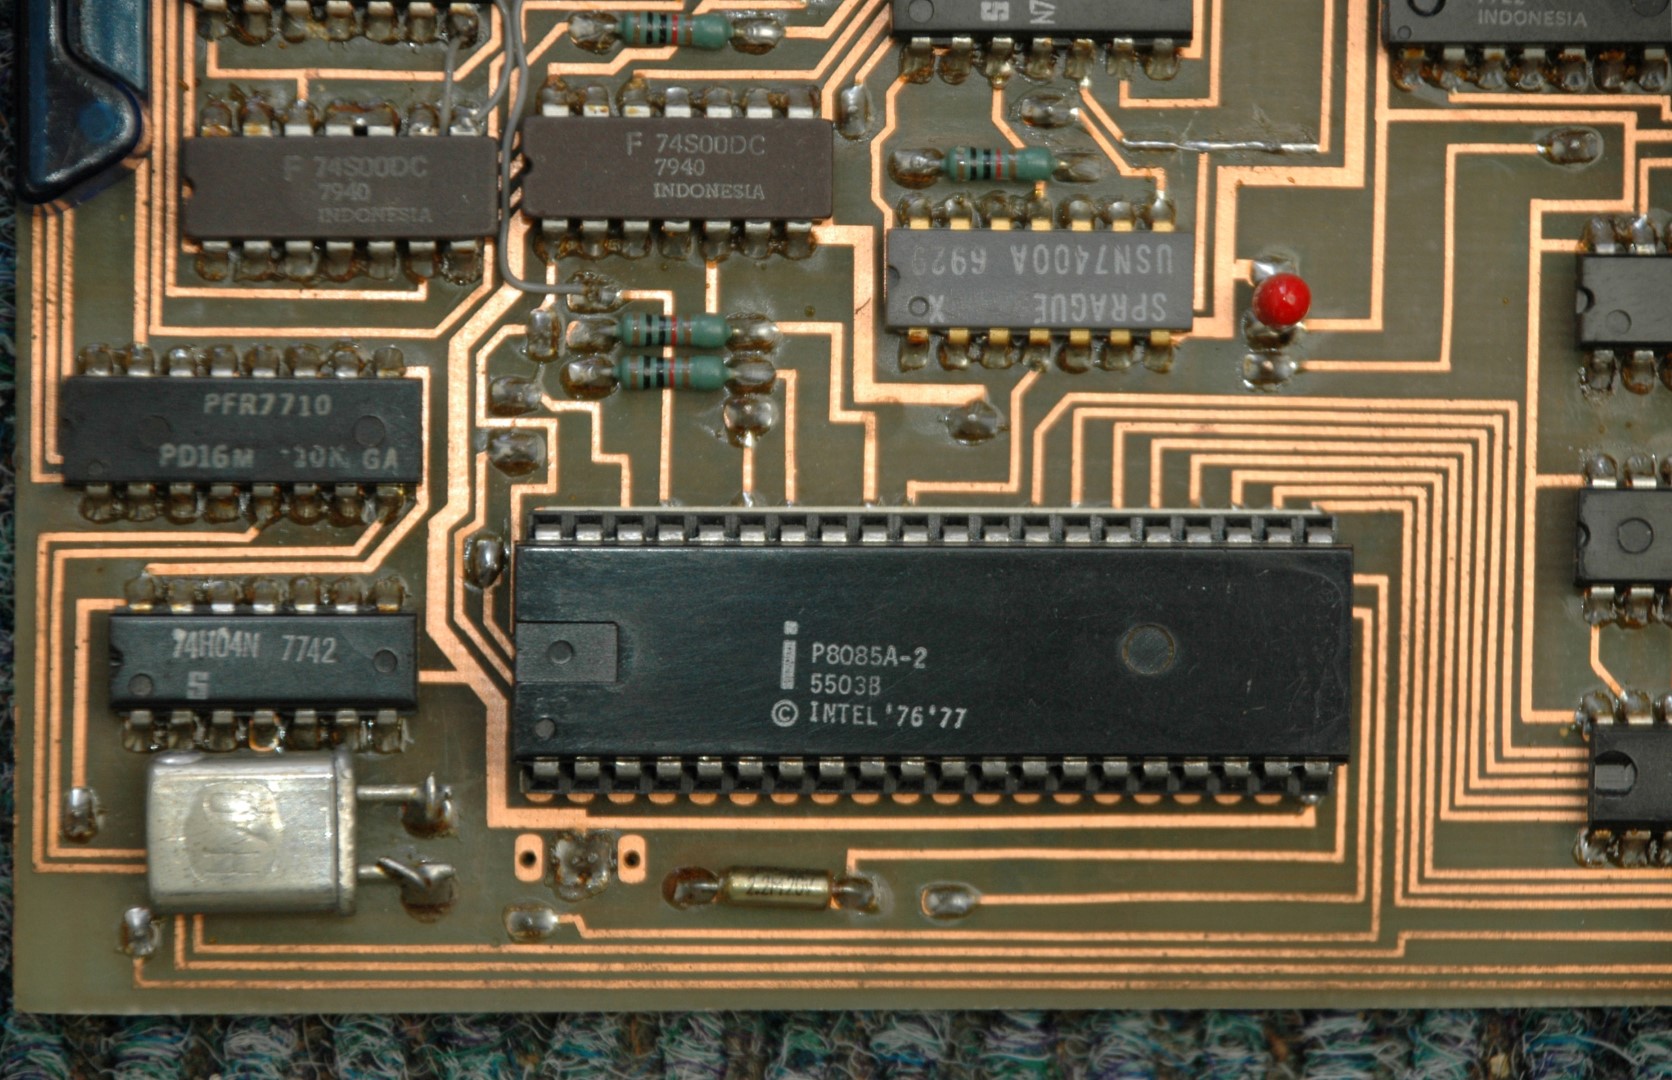 de 8085 microprocessor